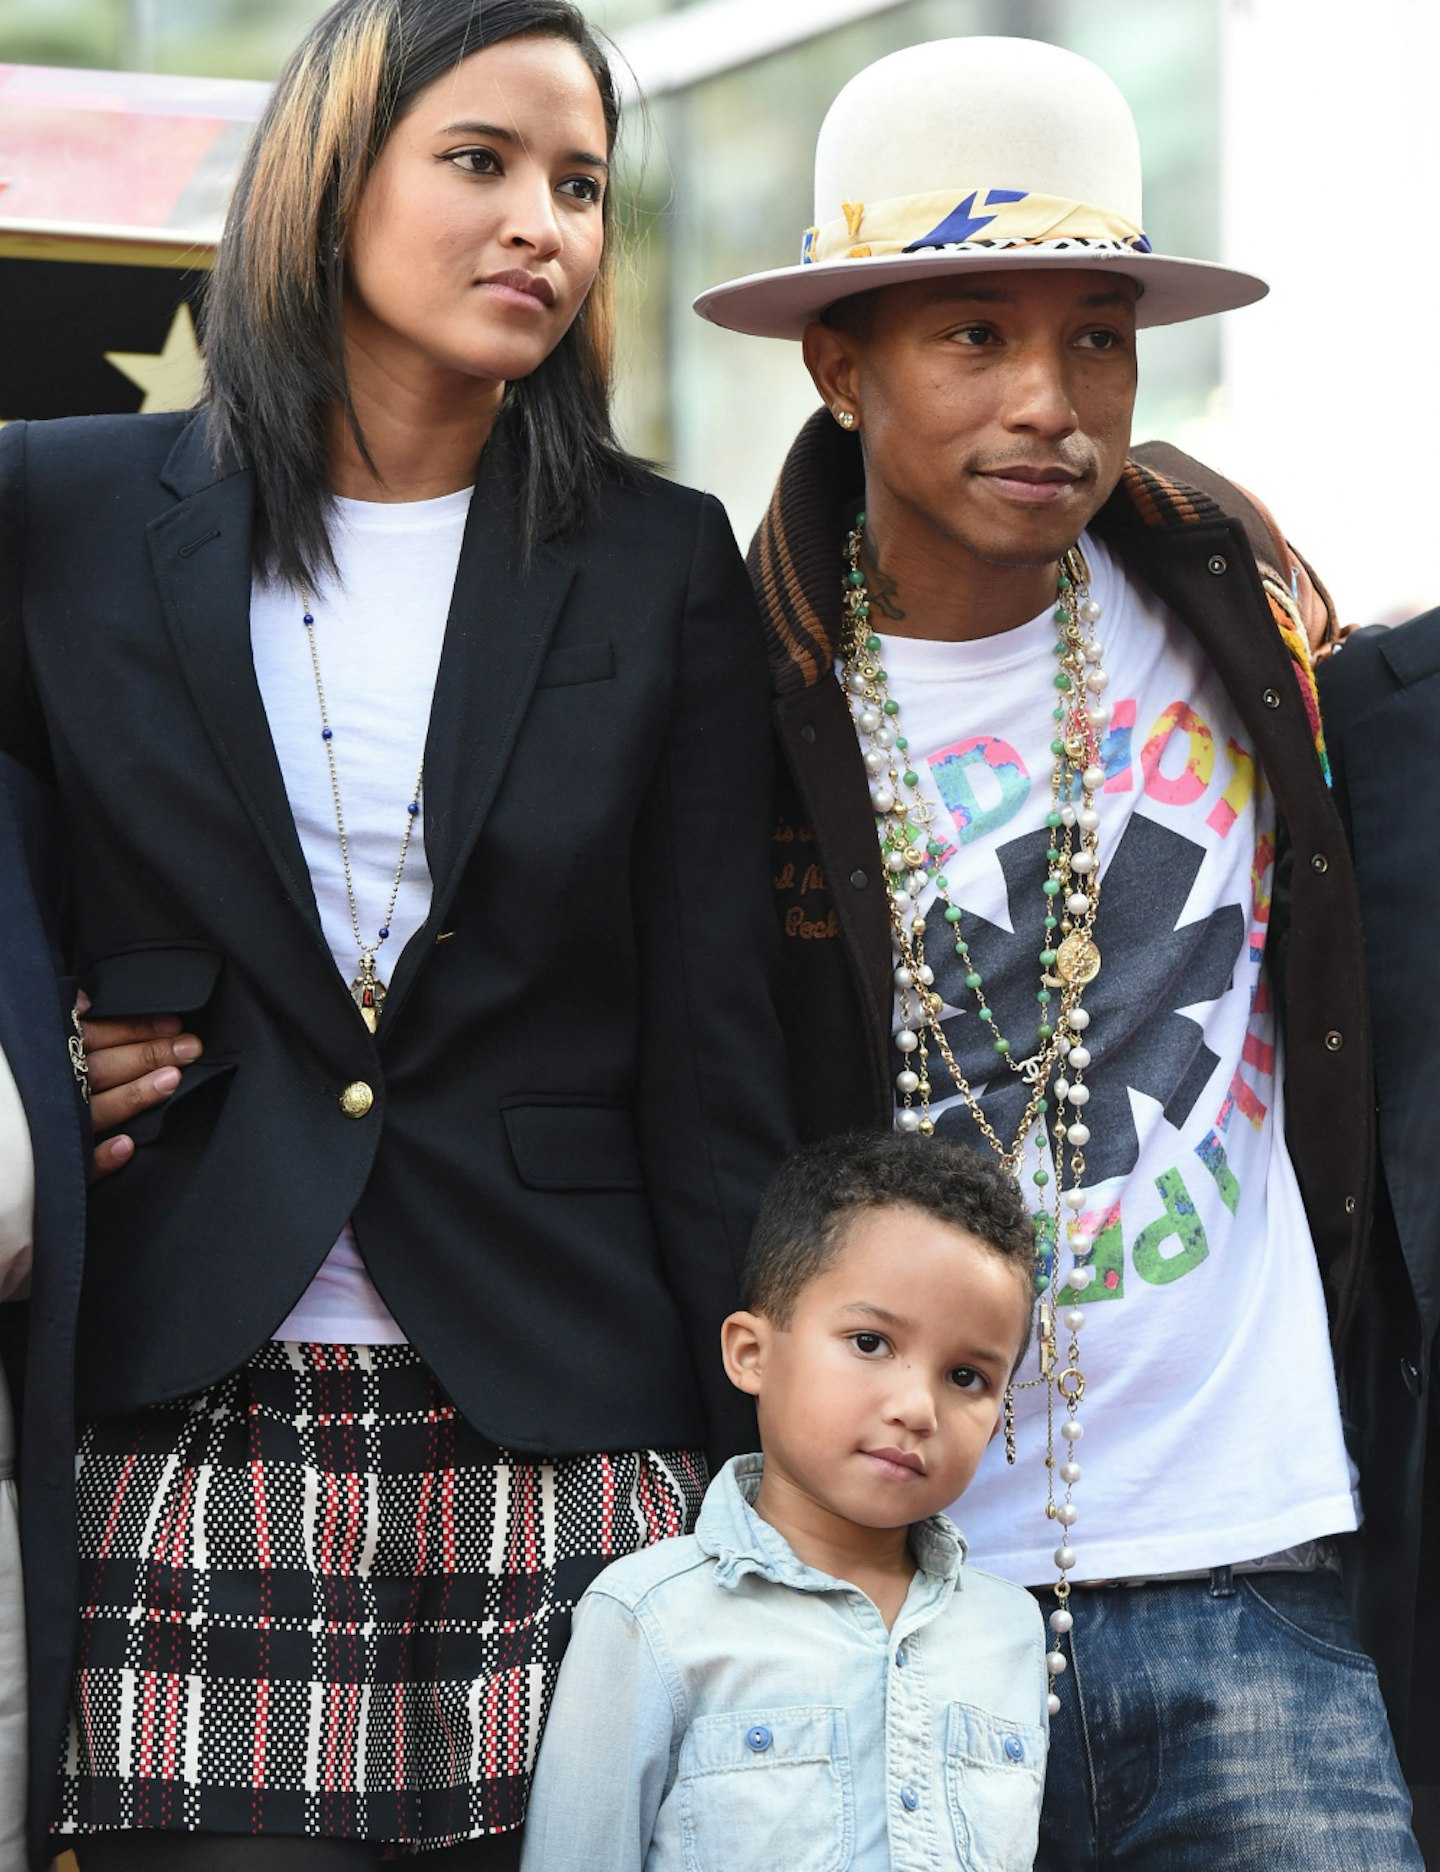 Pharrell Williams' wife Helen Lasichanh gave birth to triplets